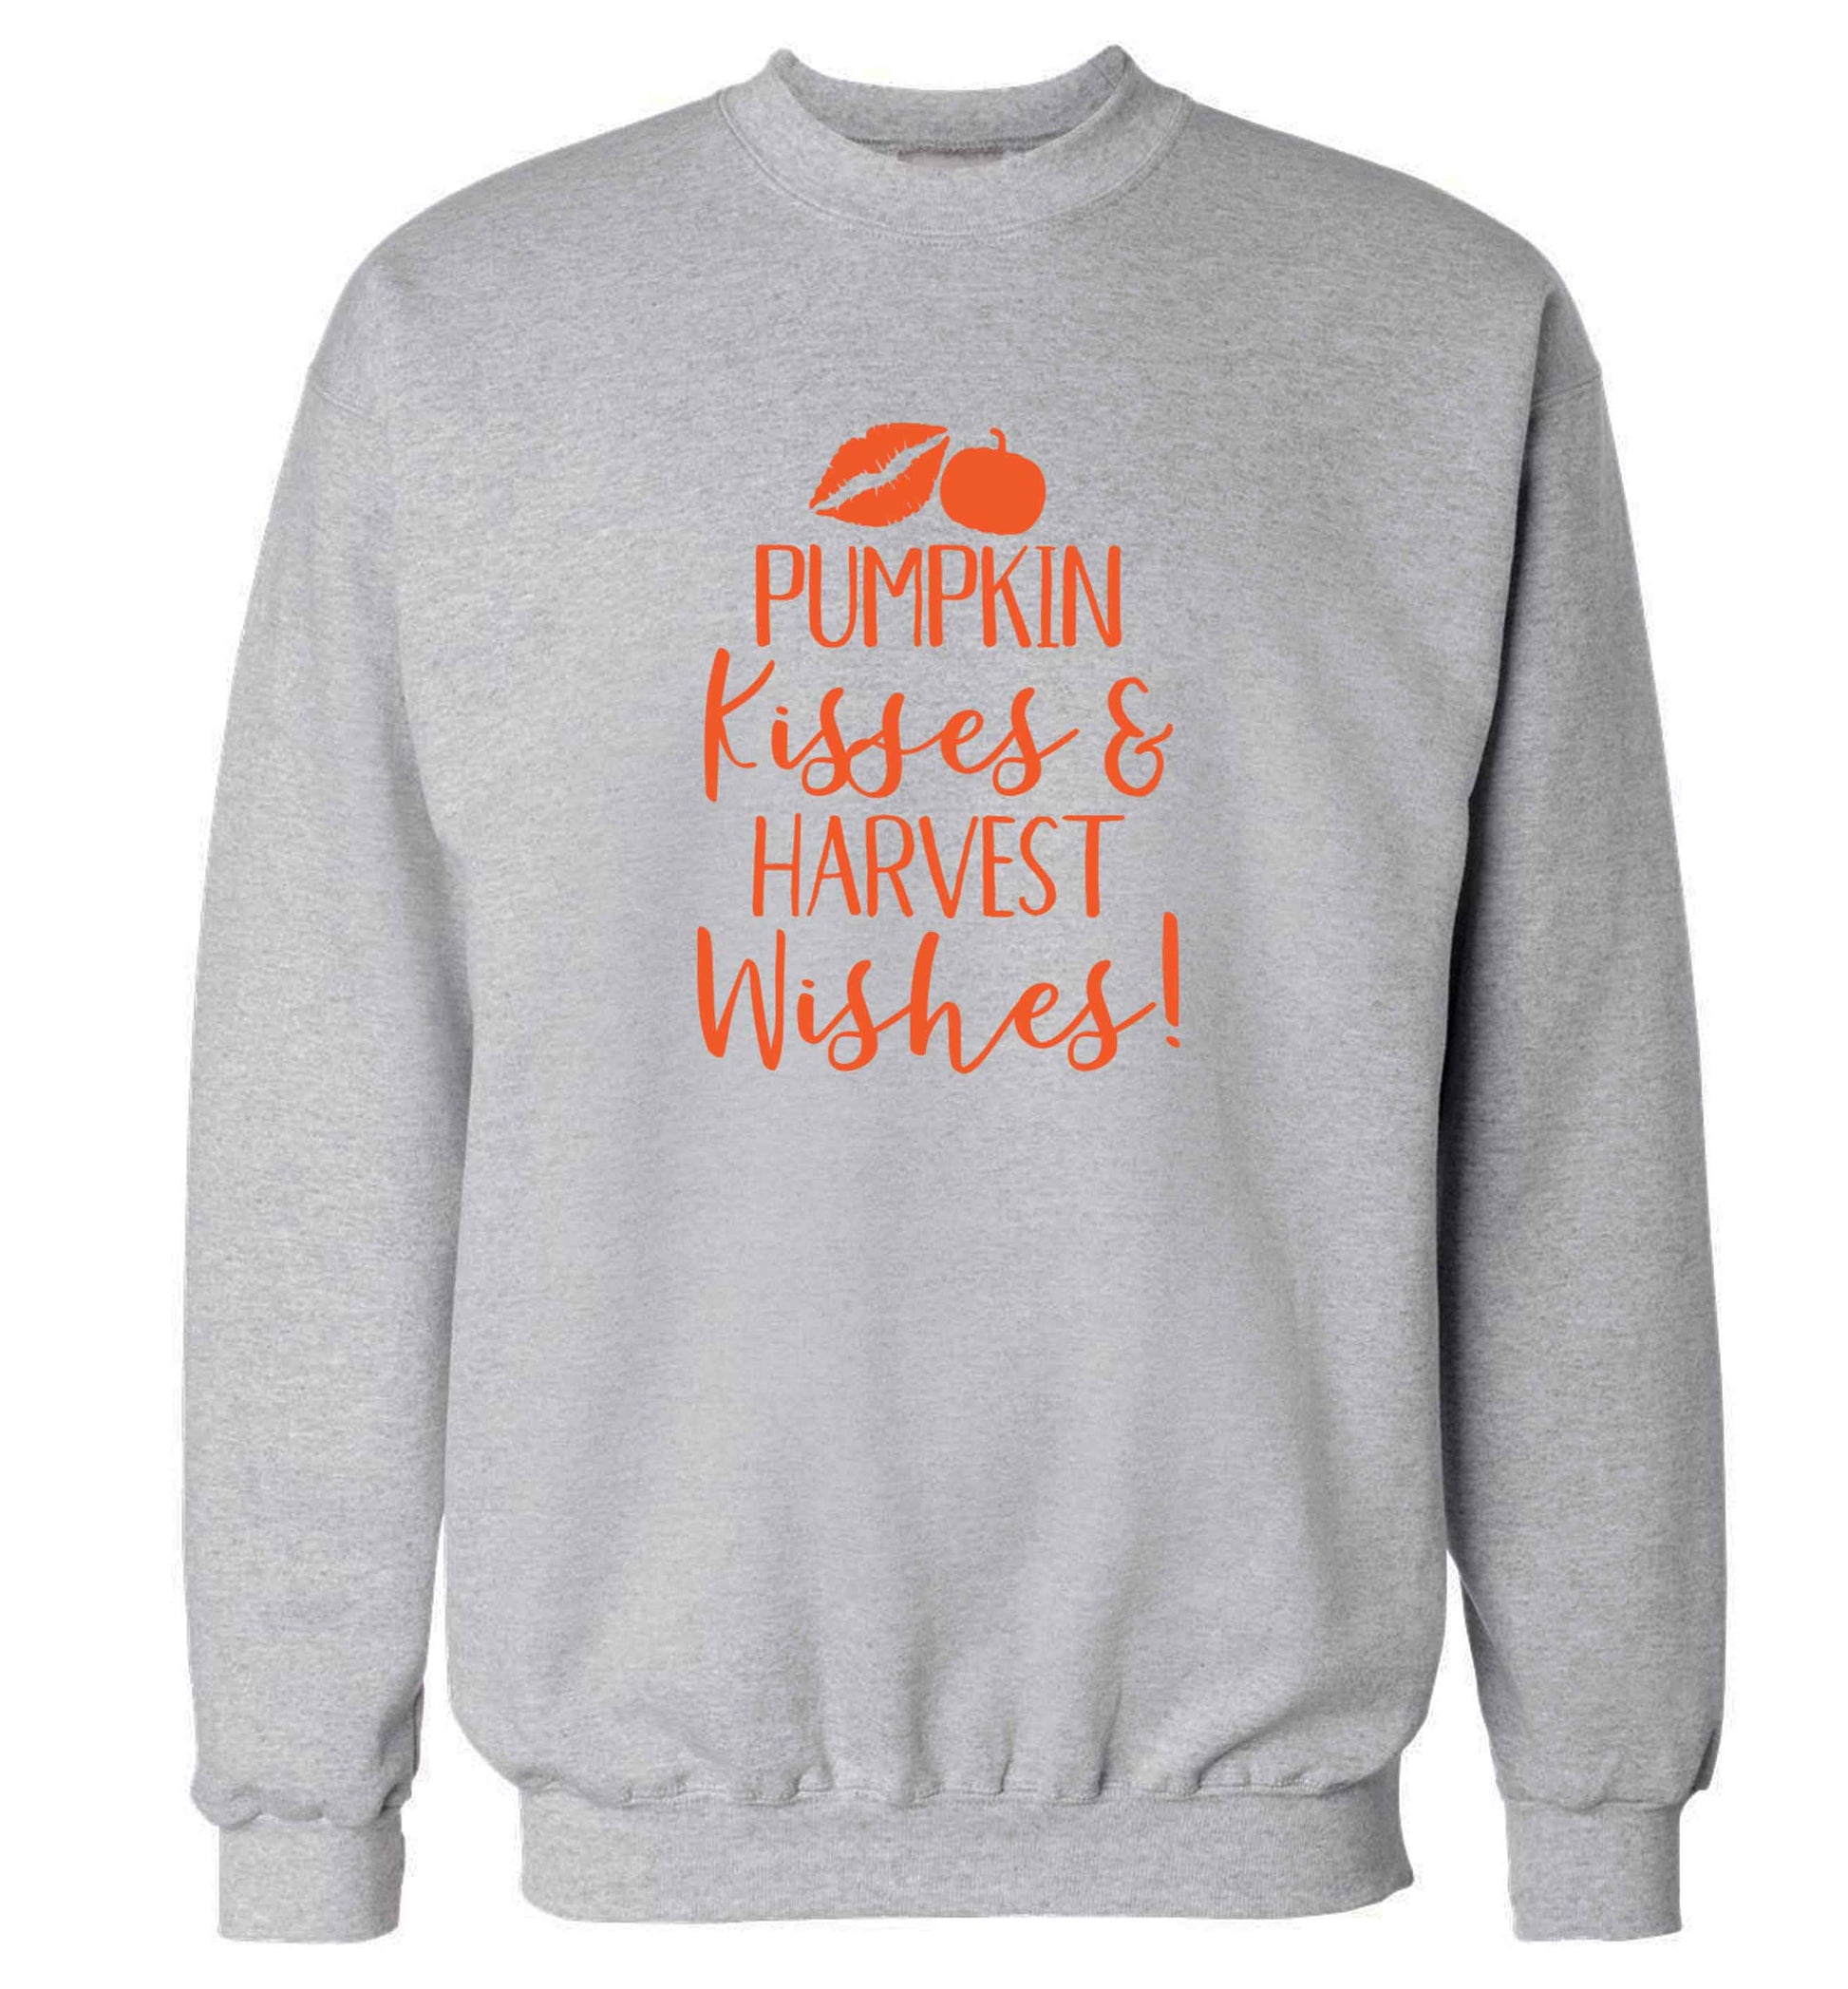 Pumpkin Kisses Harvest adult's unisex grey sweater 2XL